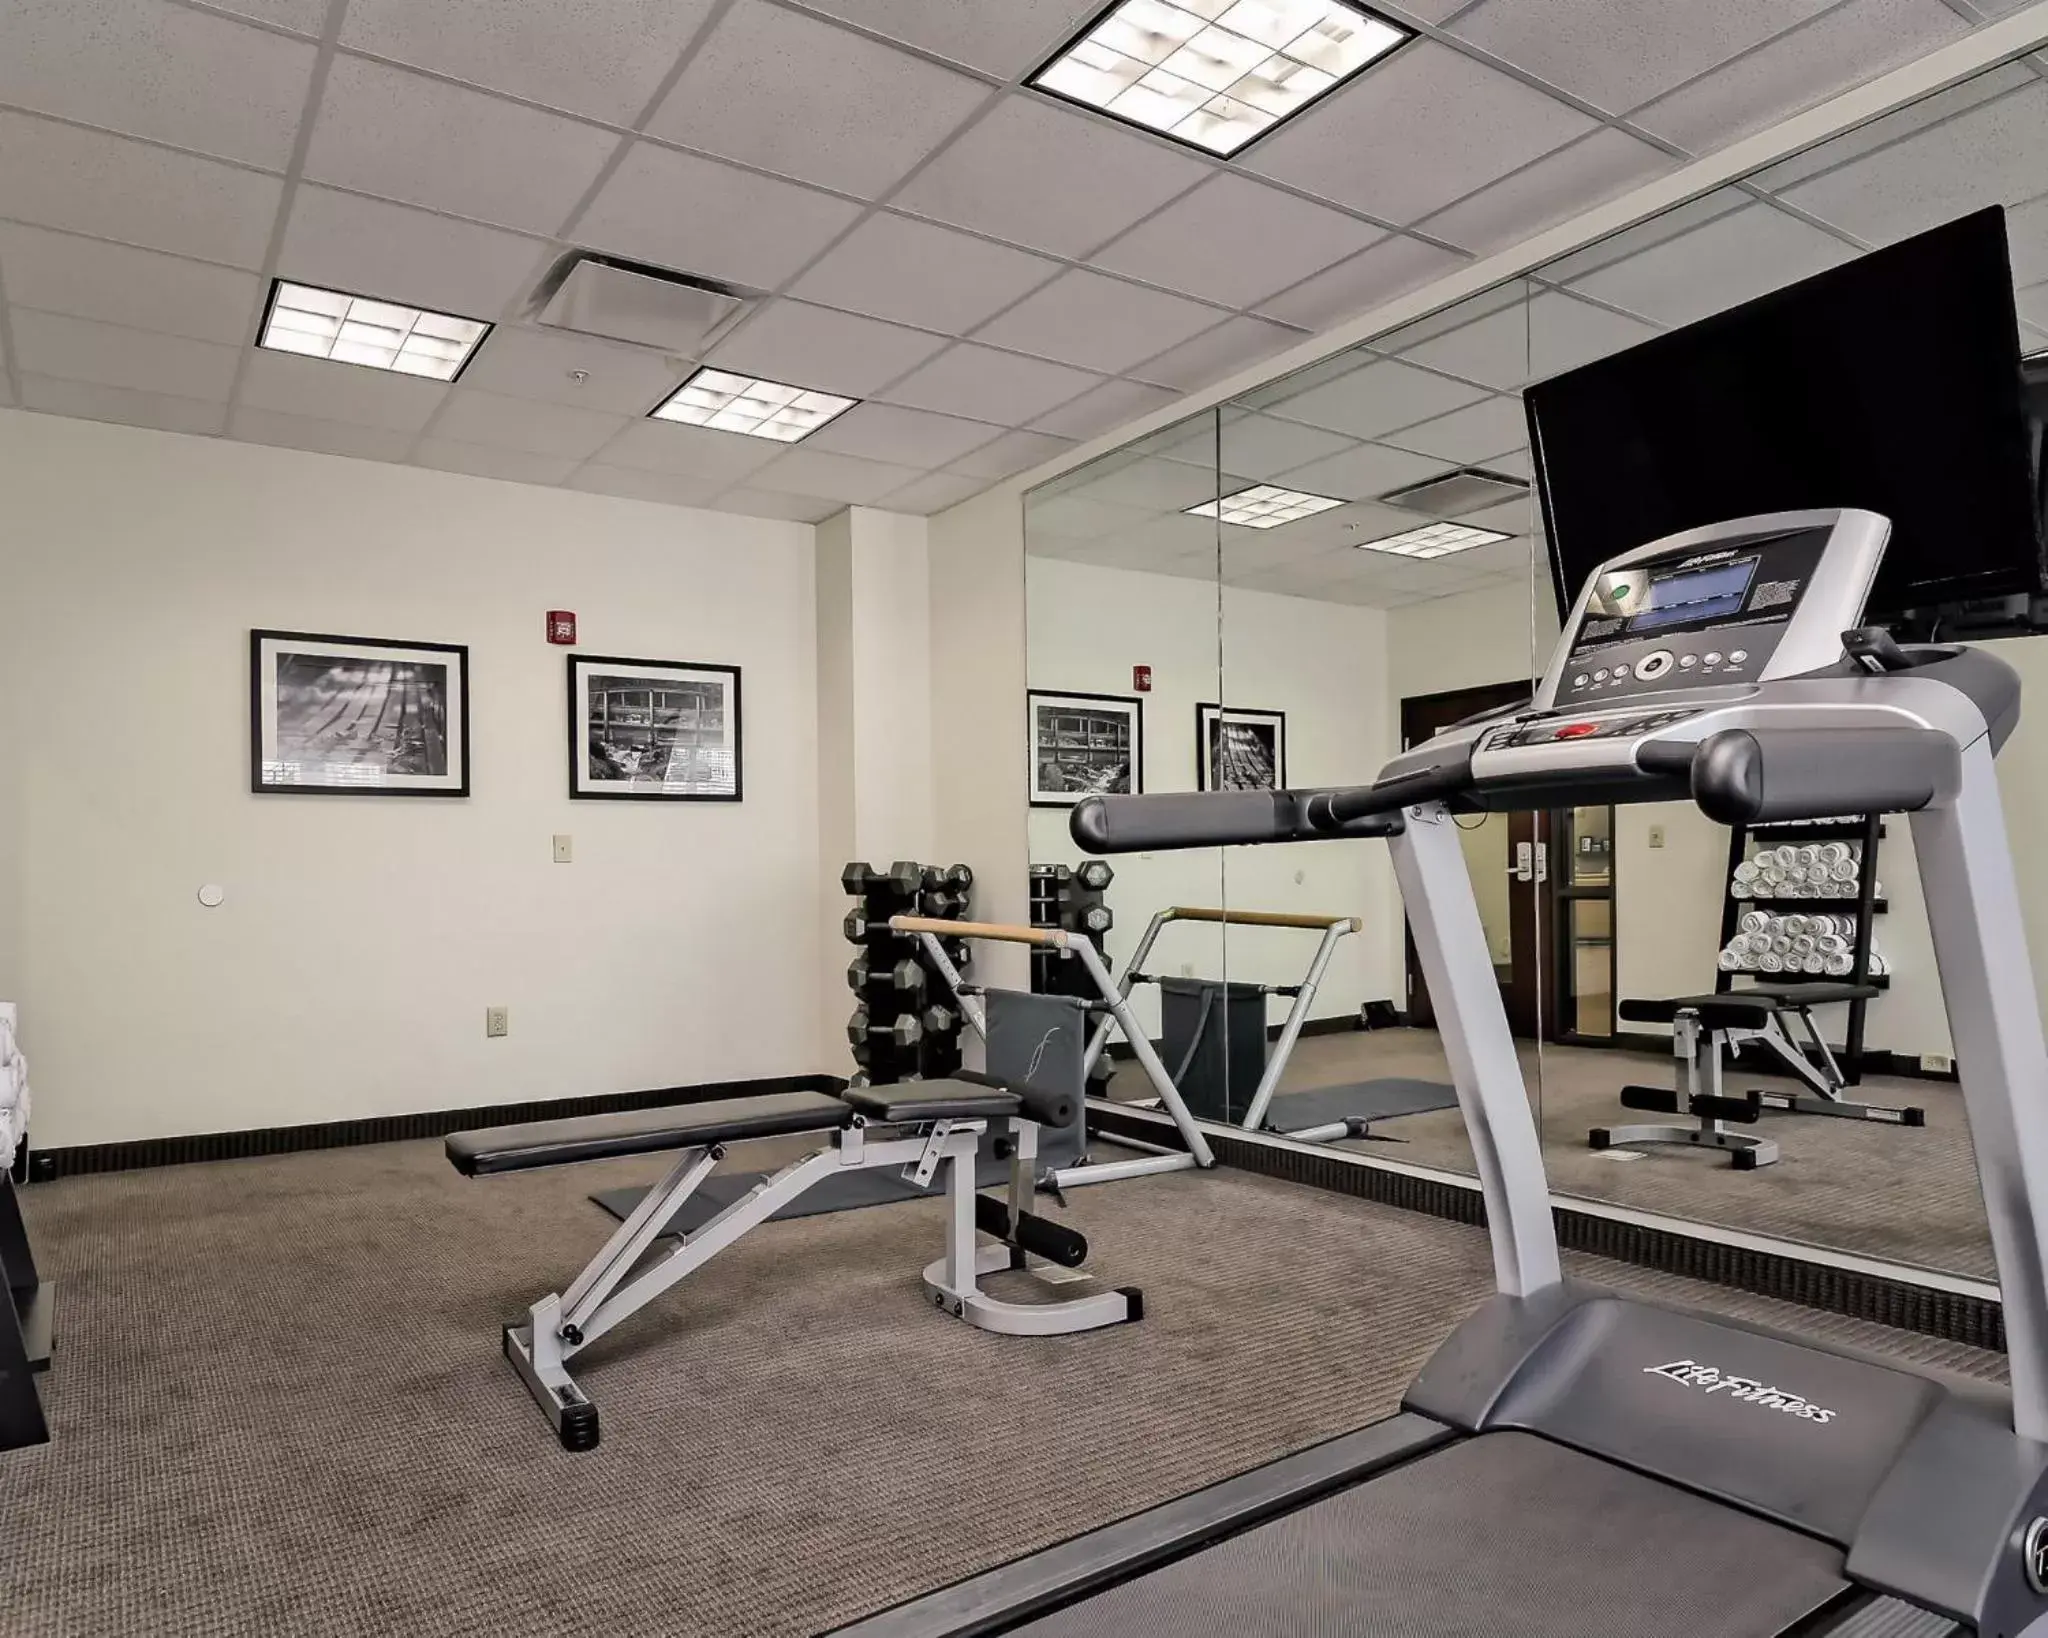 Fitness centre/facilities, Fitness Center/Facilities in Sleep Inn & Suites - Fort Scott